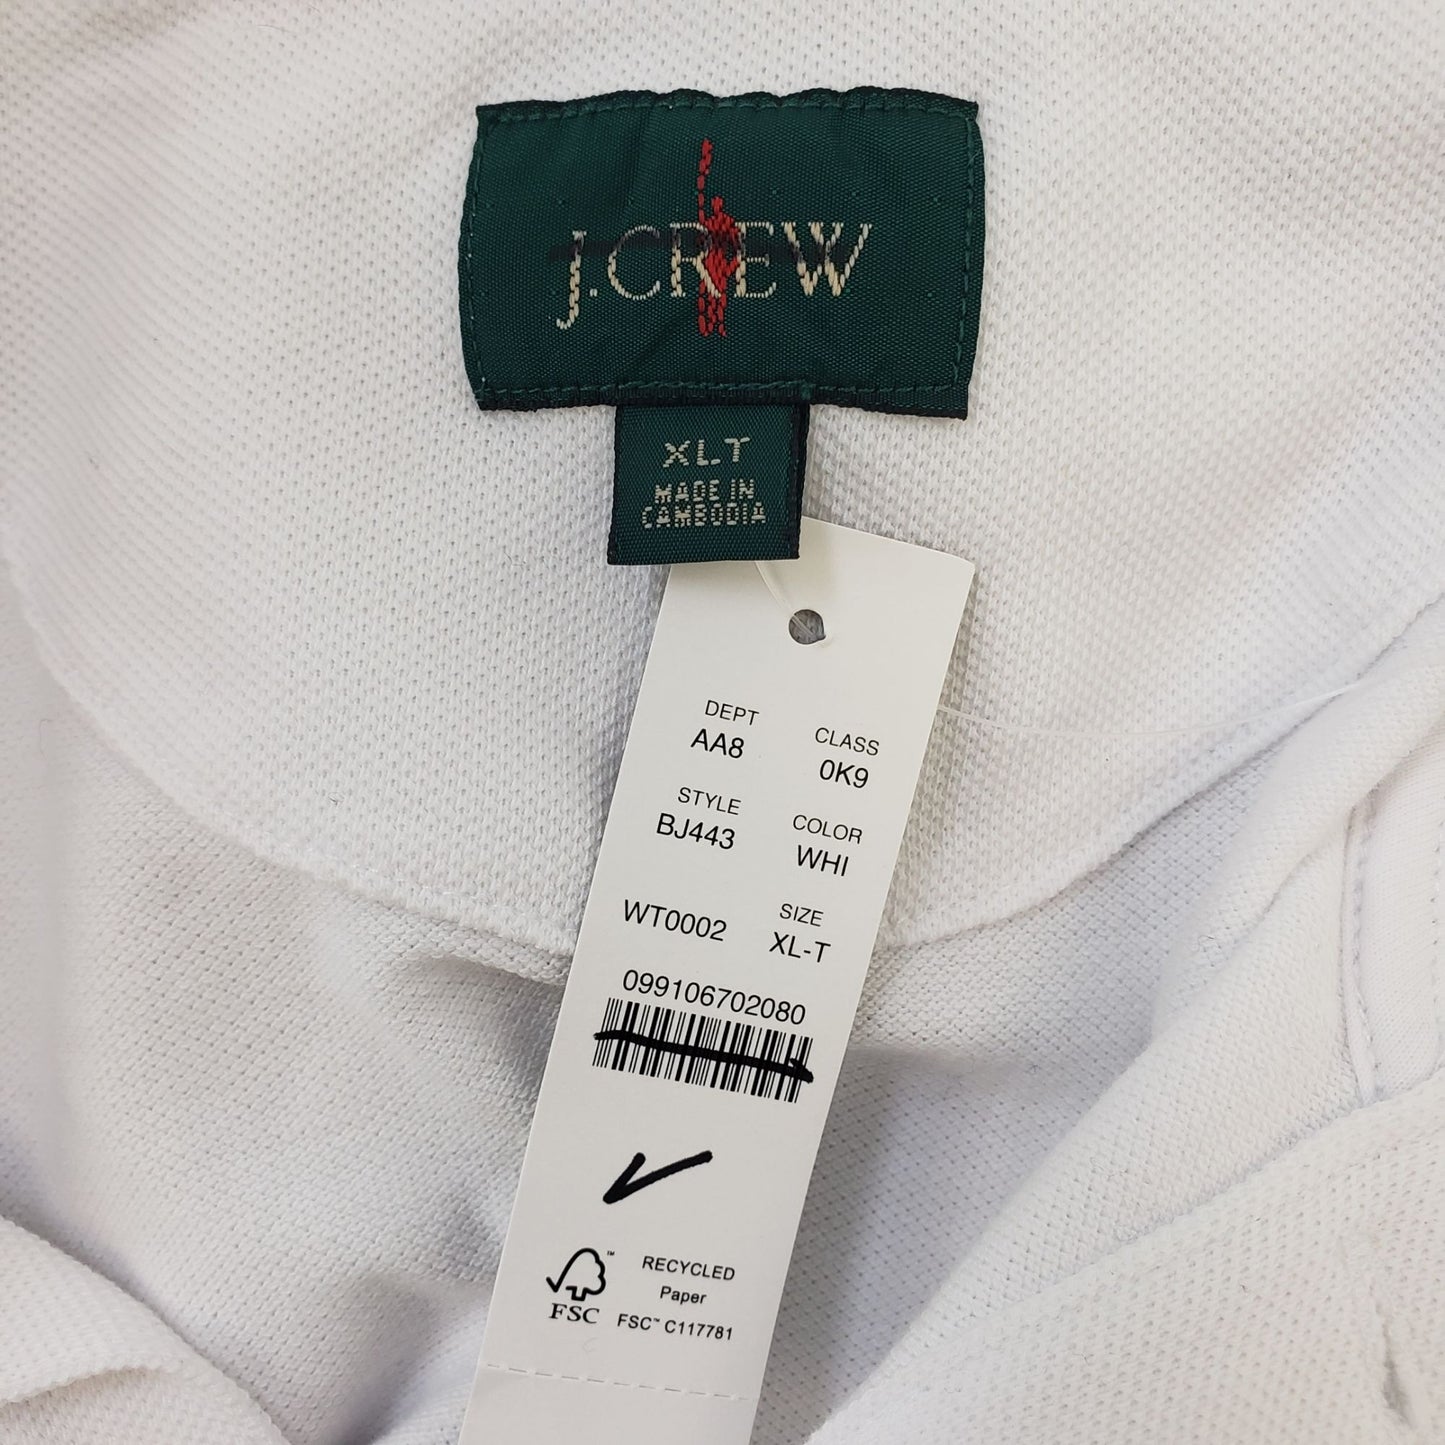 NWT J. Crew Classic Pique Short Sleeve Polo Shirt Size XL Tall